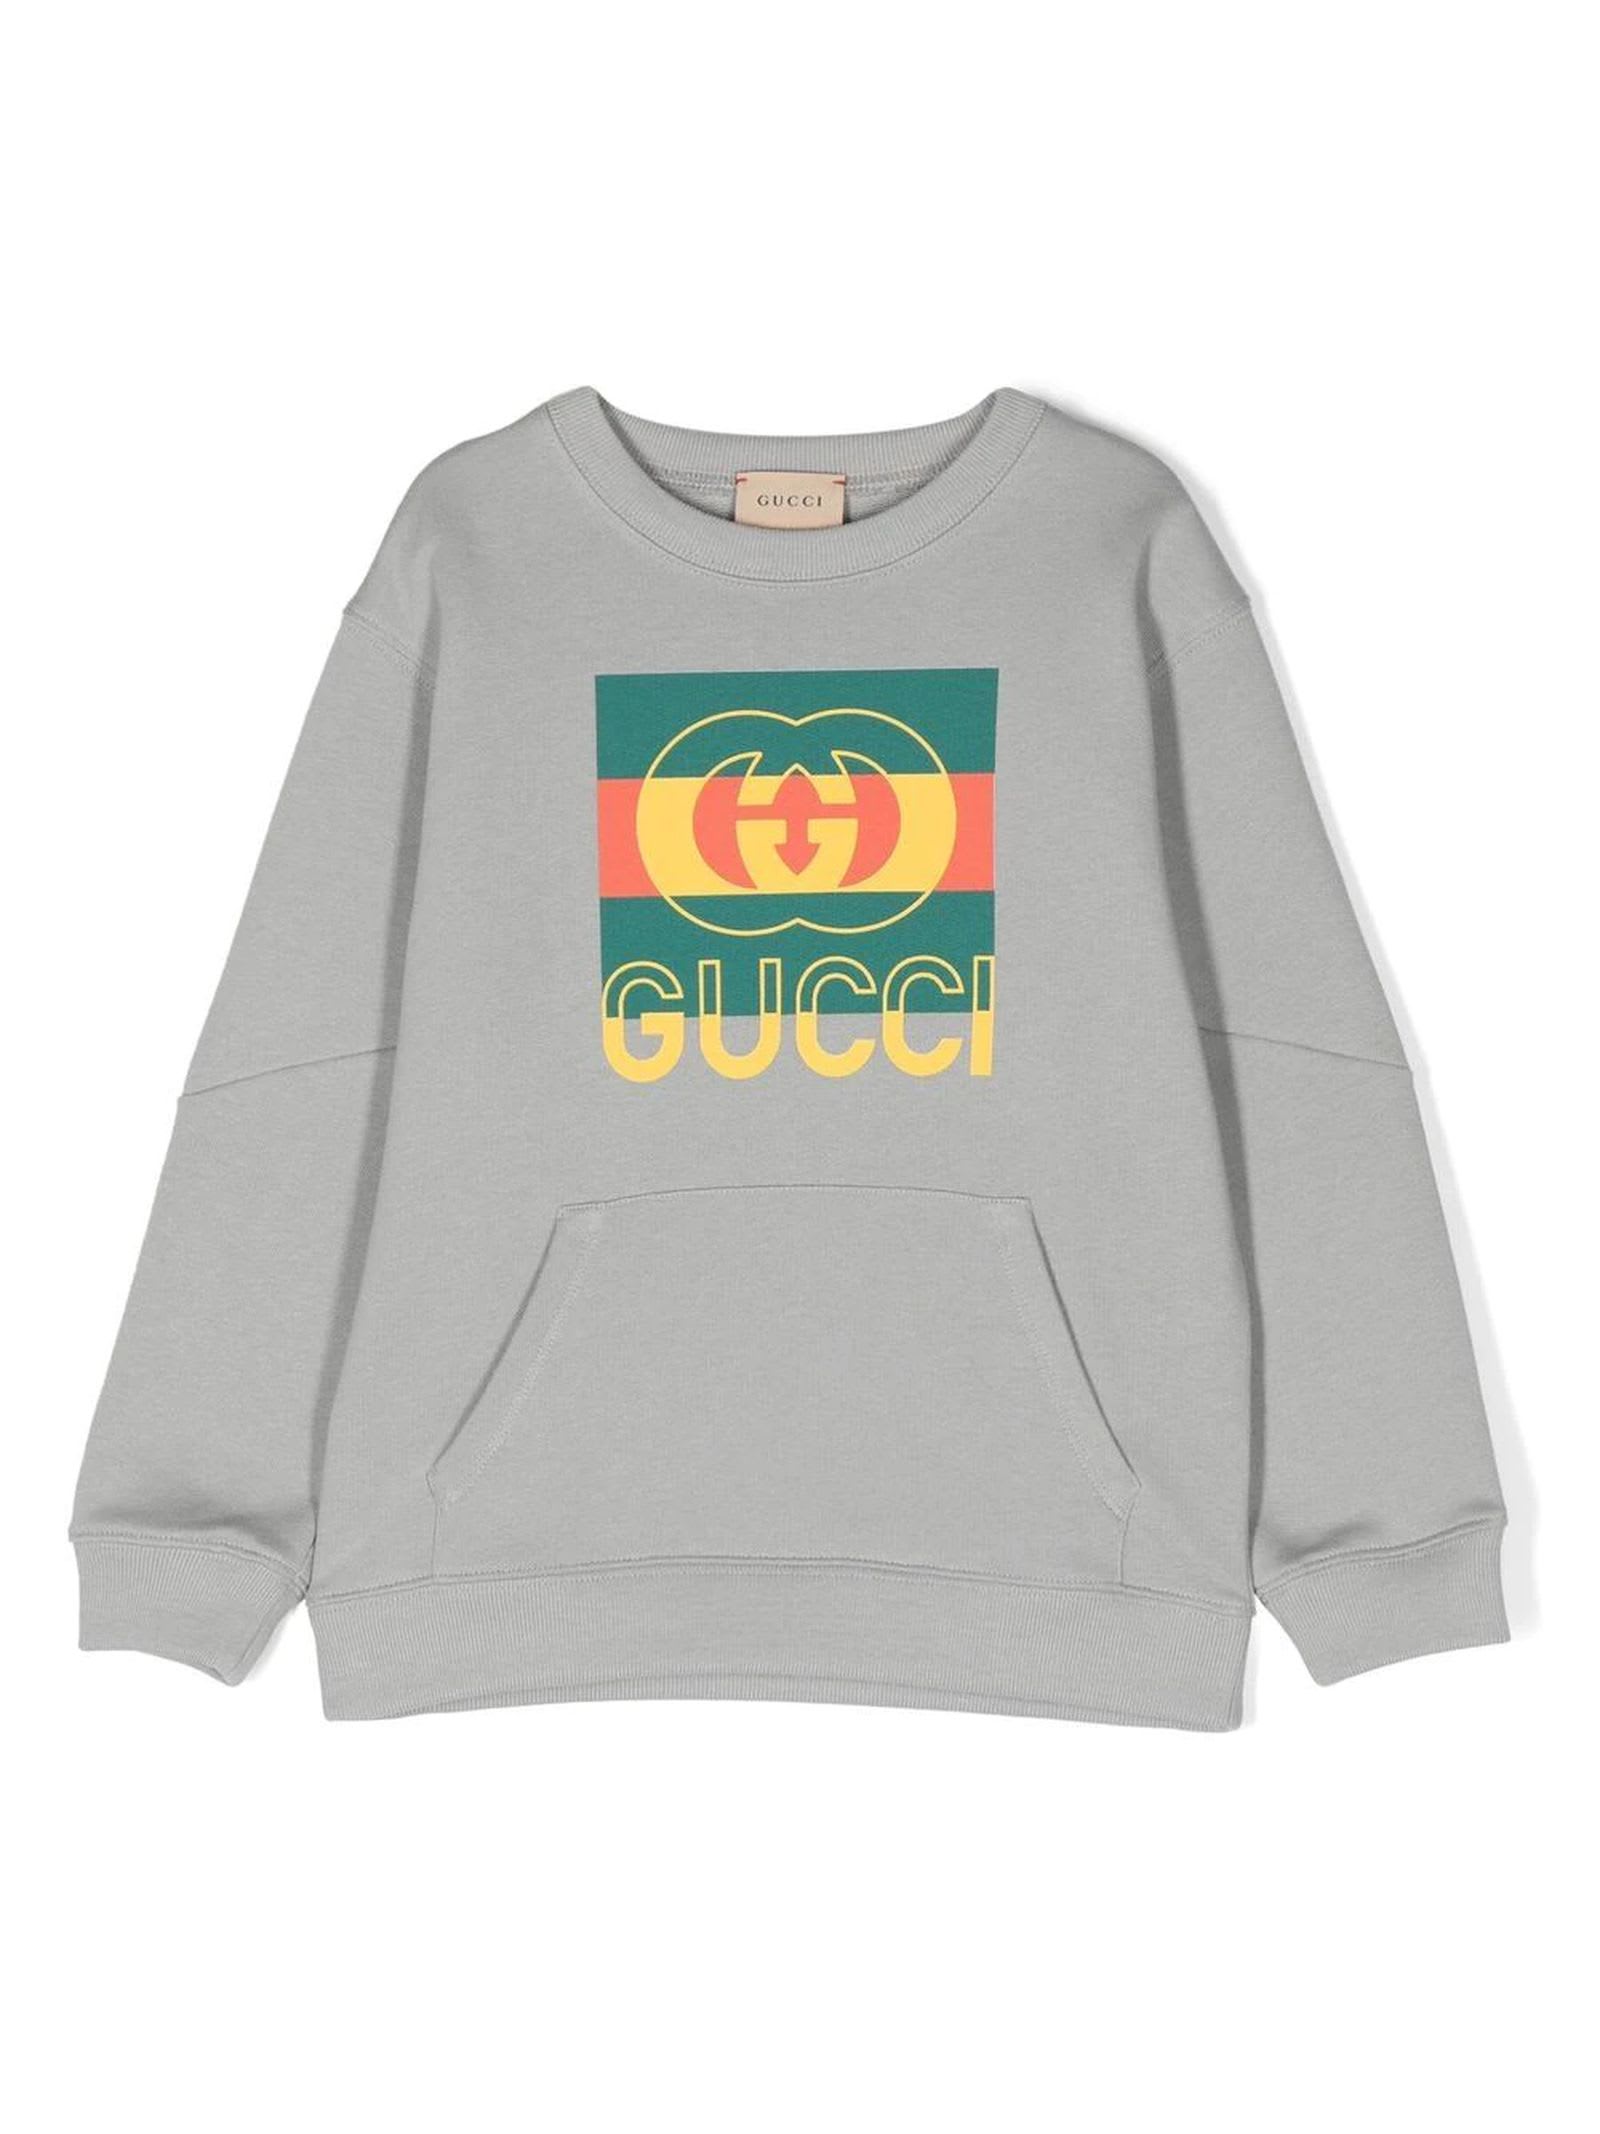 Gucci Grey Cotton Sweatshirt